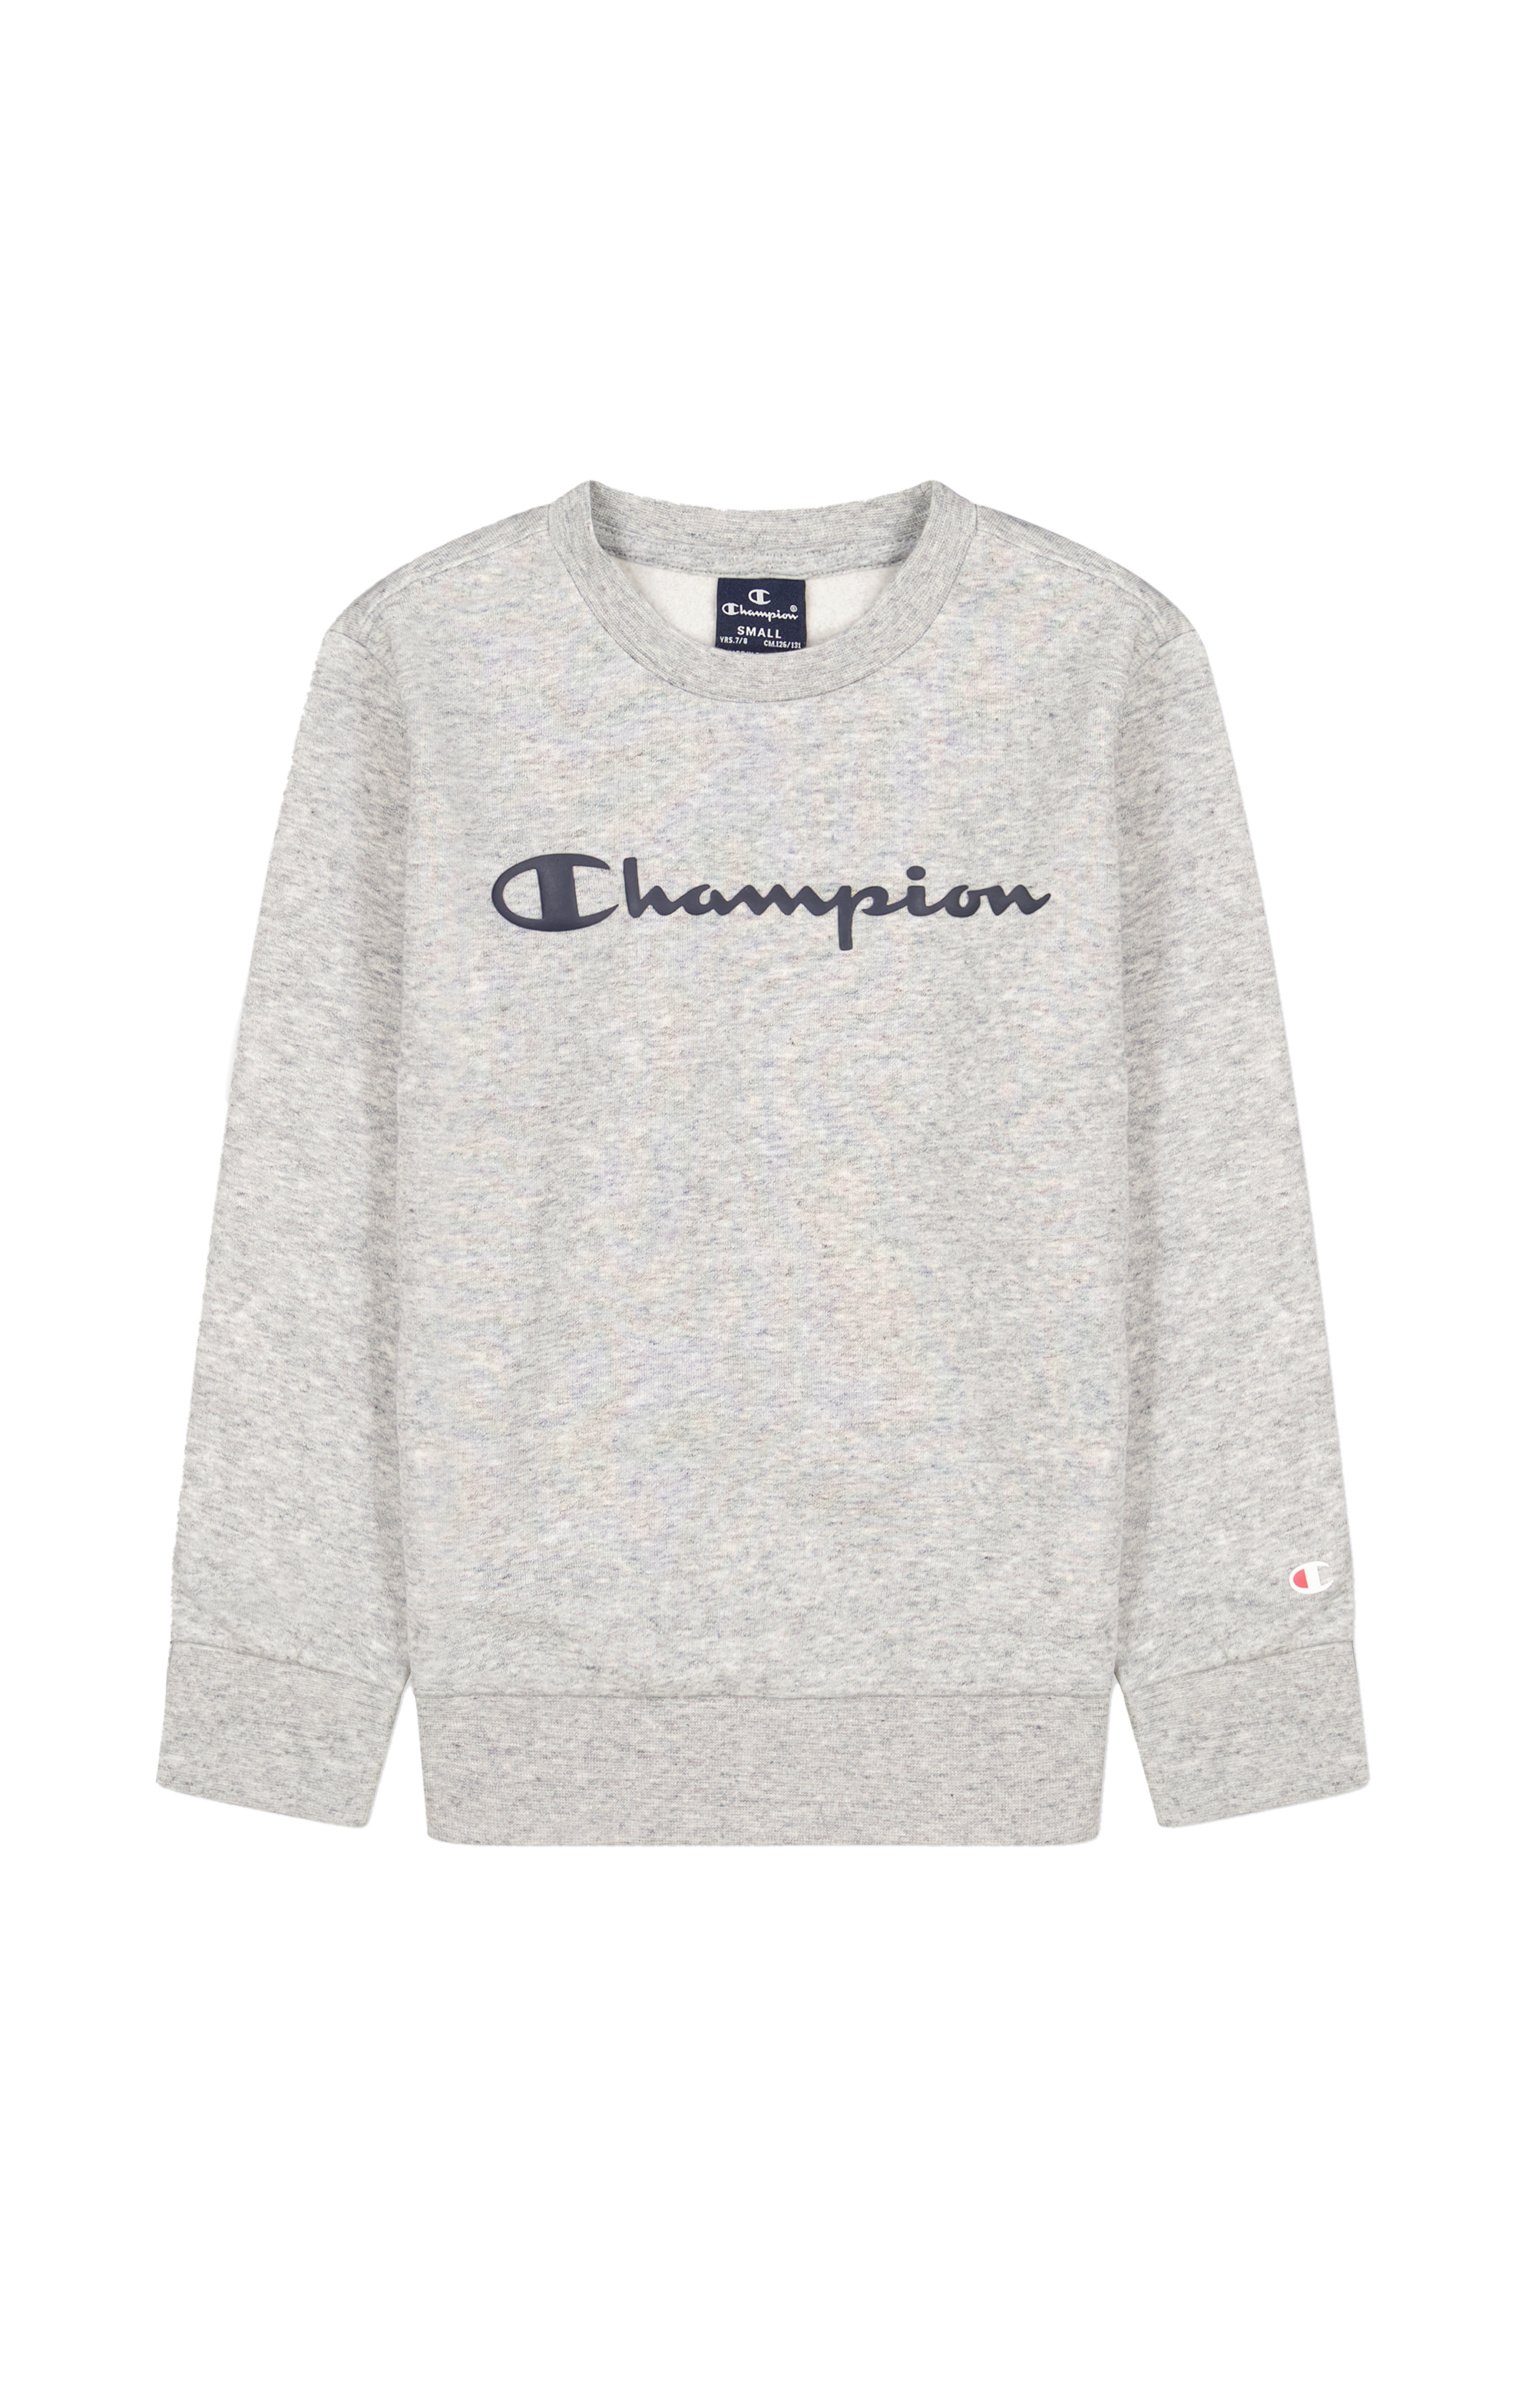 Champion Sweatshirt Champion Kinder Sweatshirt Crewneck 305360 noxm (grau)